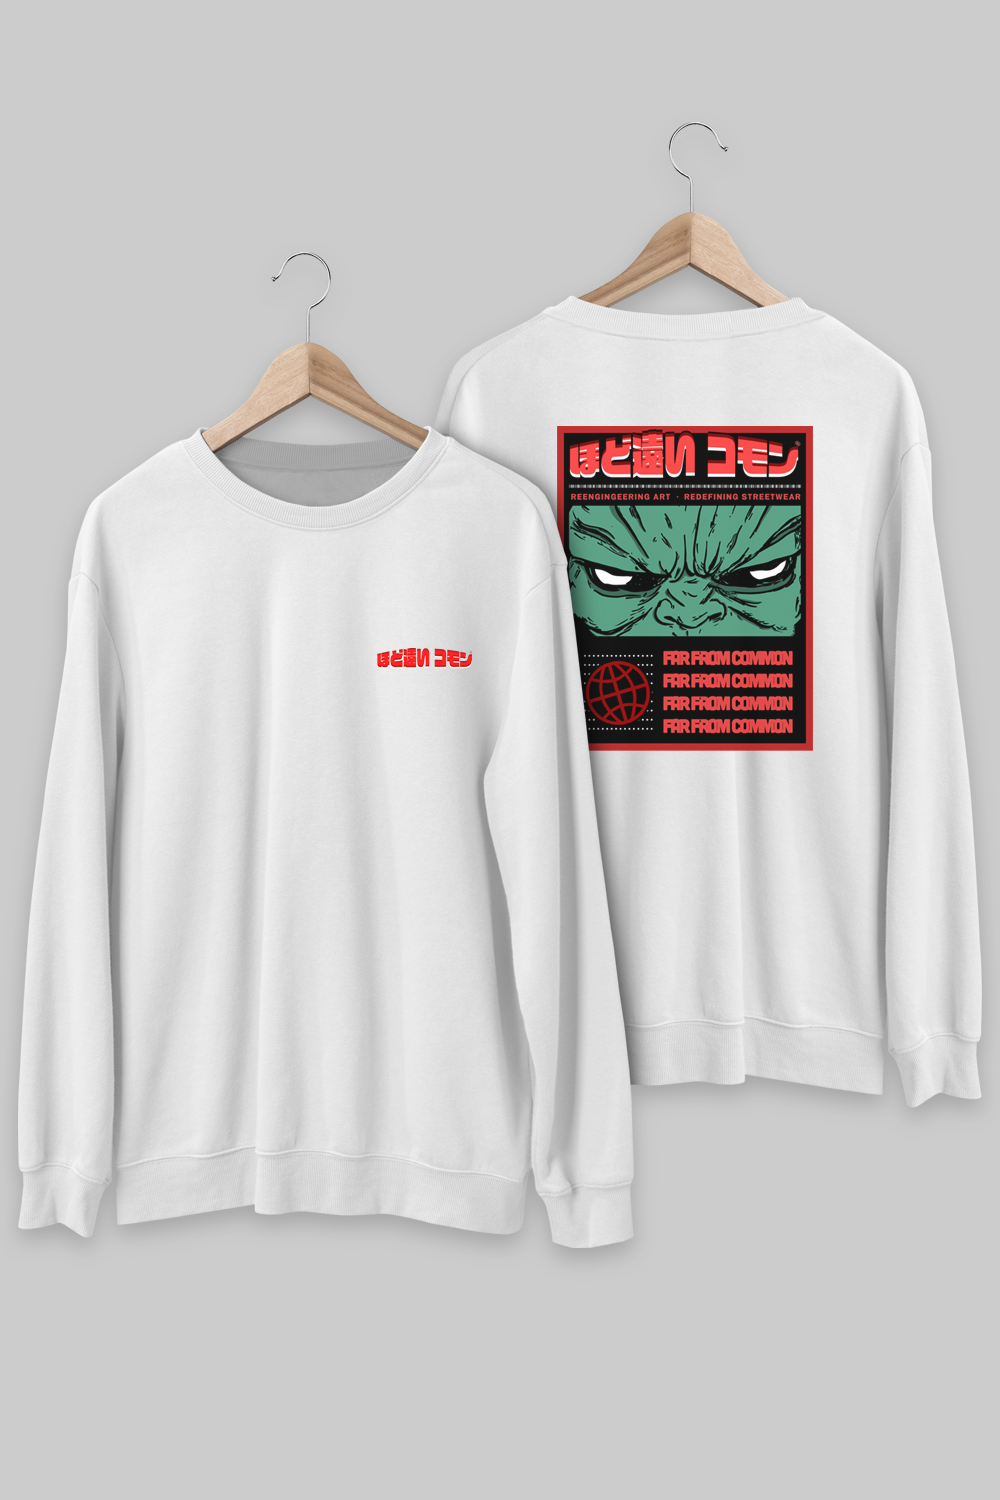 Green Menace White Unisex Sweatshirt